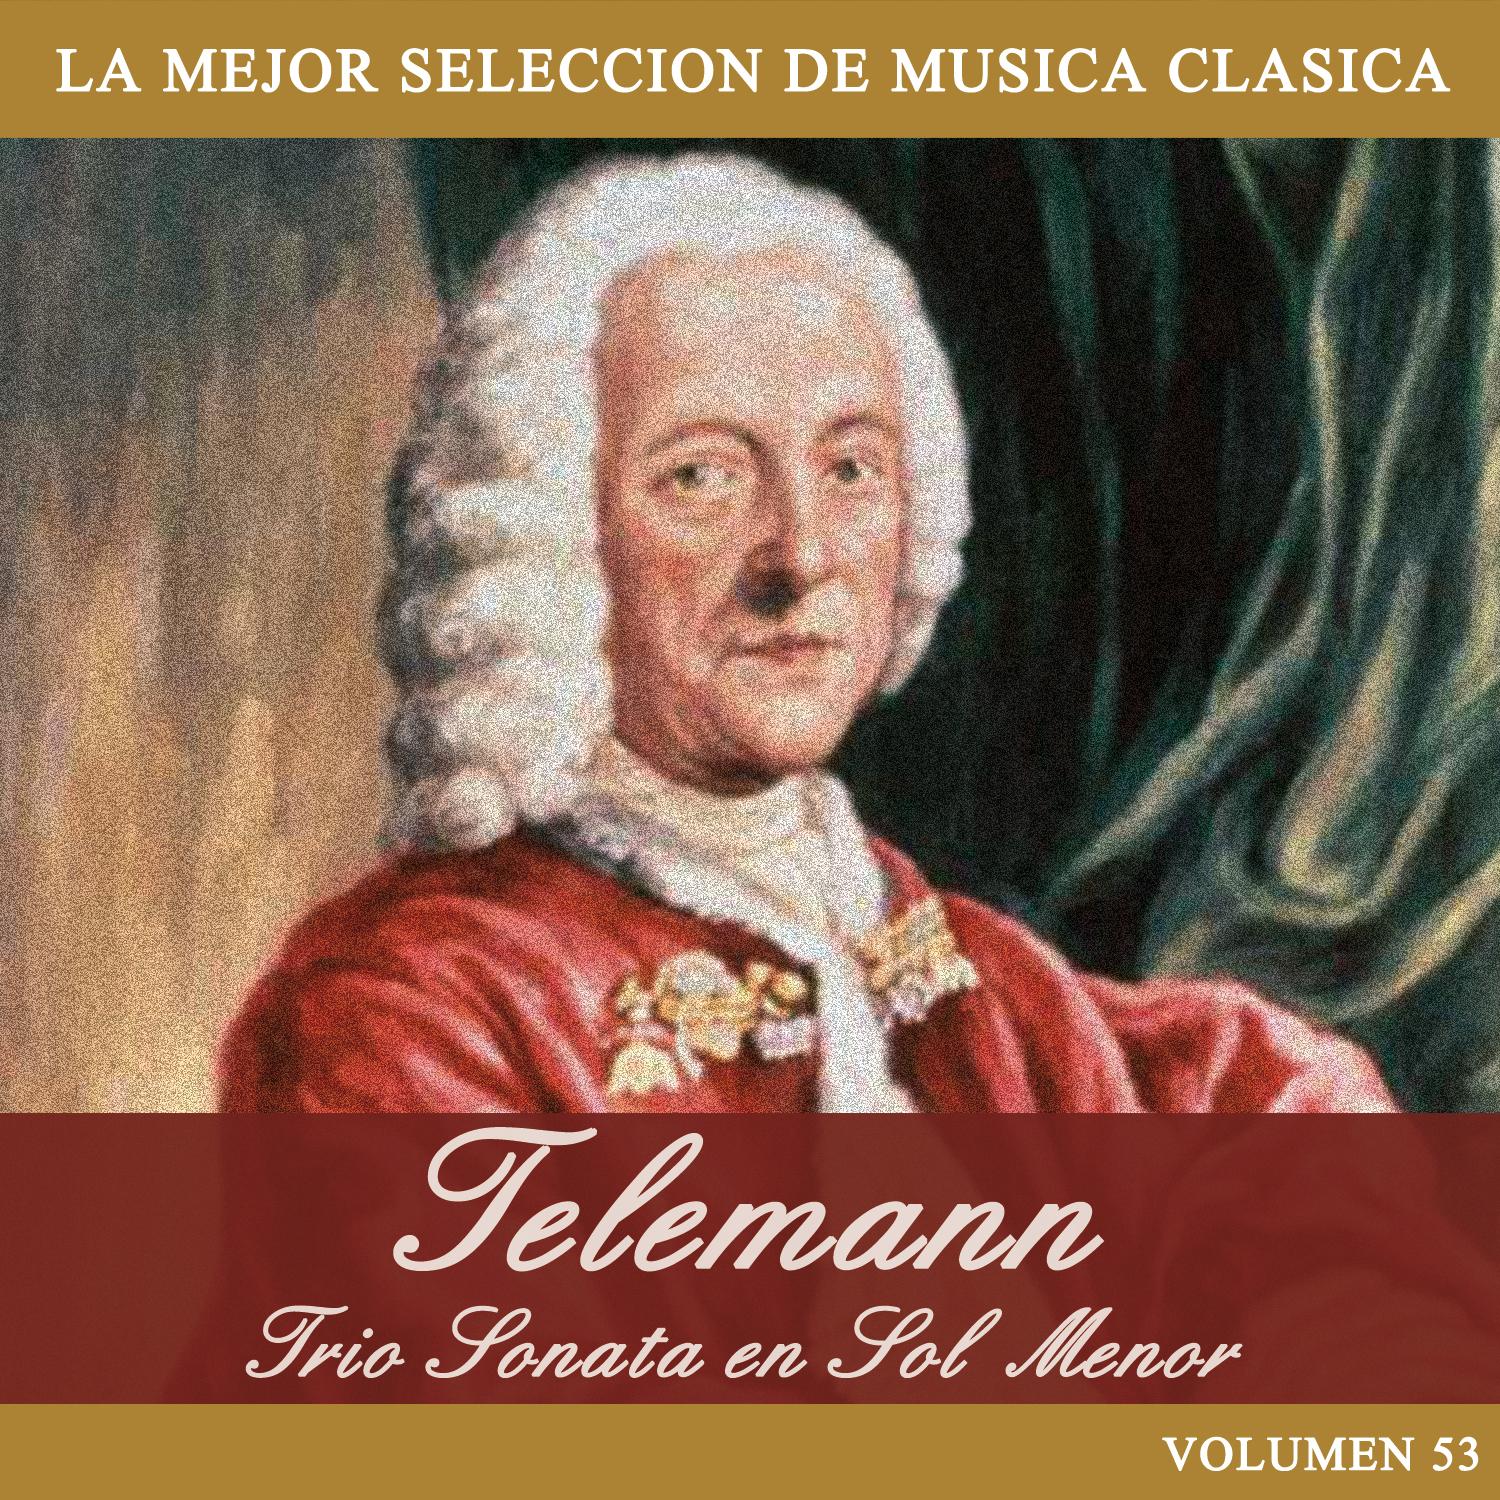 Telemann: Trio Sonata en Sol Menor